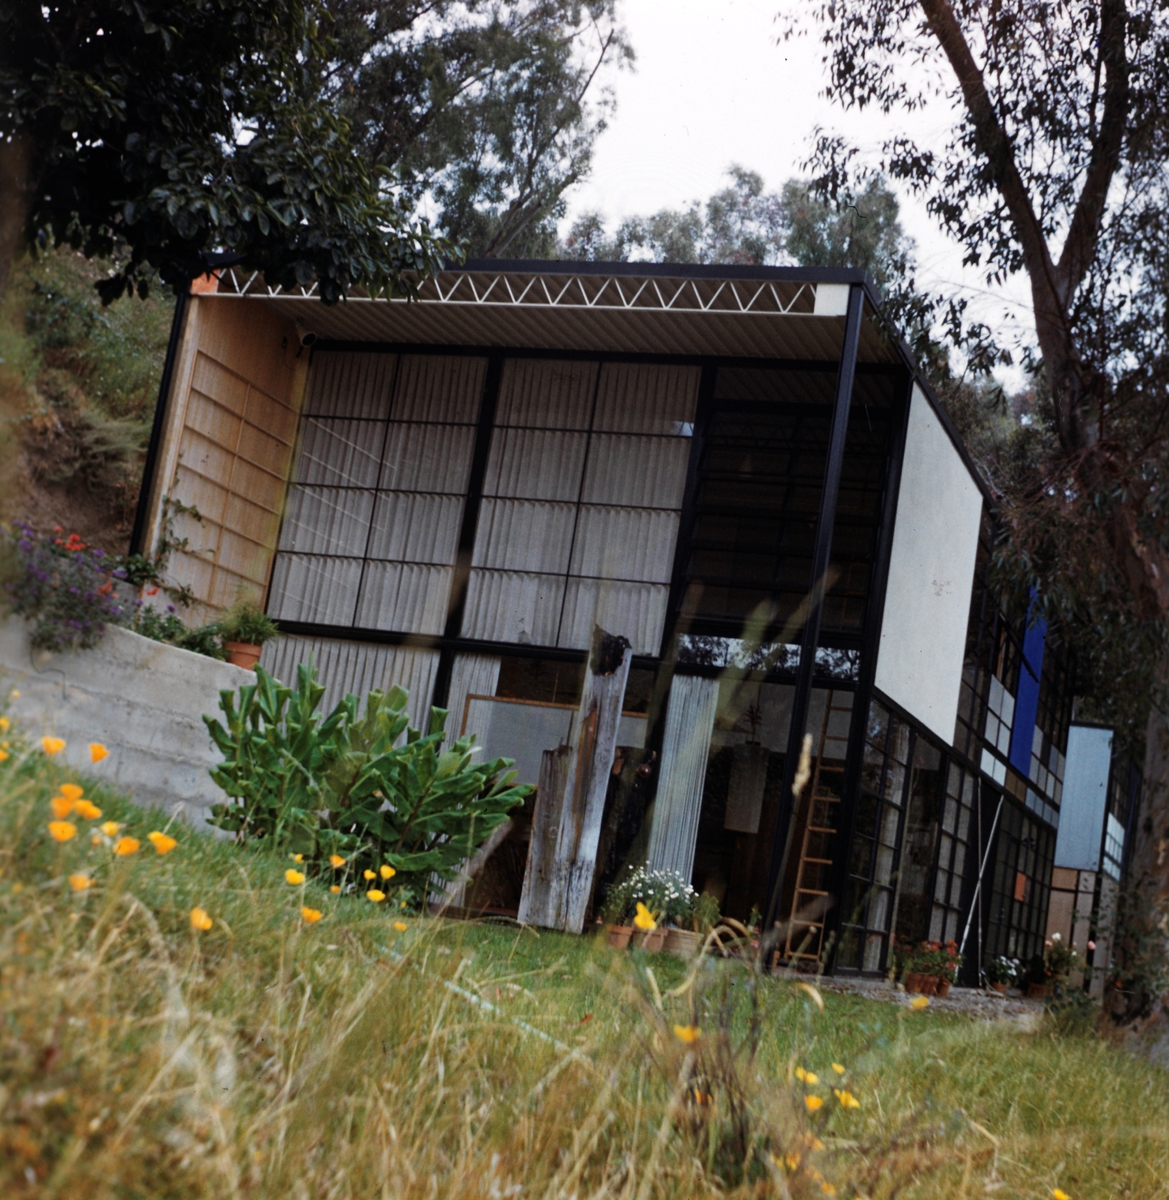 Charles og Ray Eames' eget hus [Fotografi]